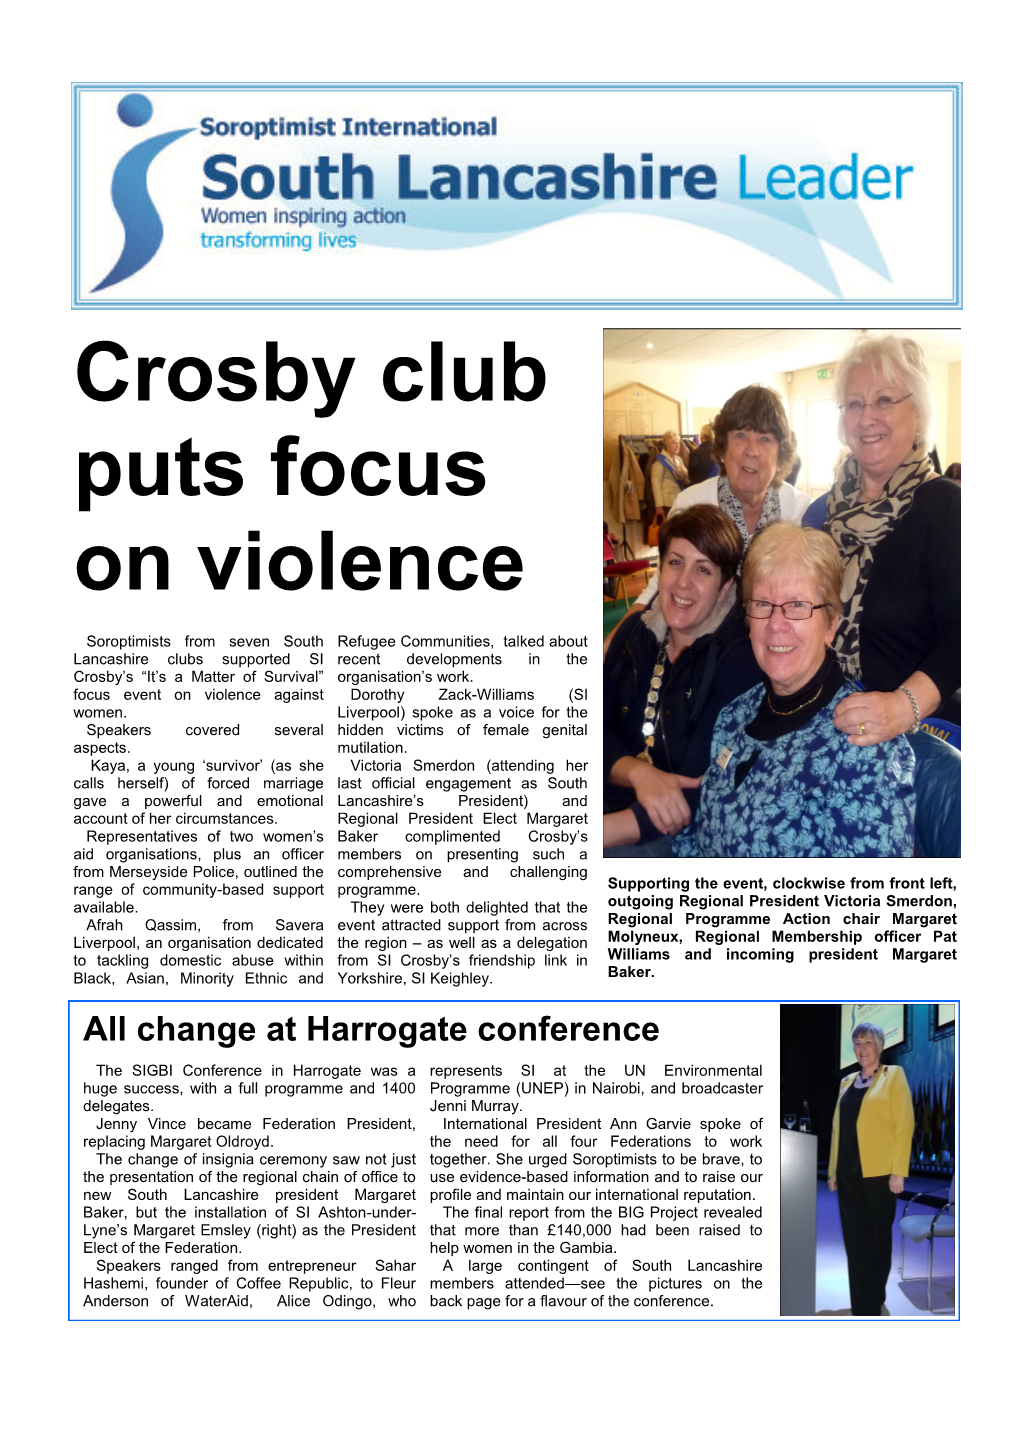 Crosby Club Puts Focus on Violence